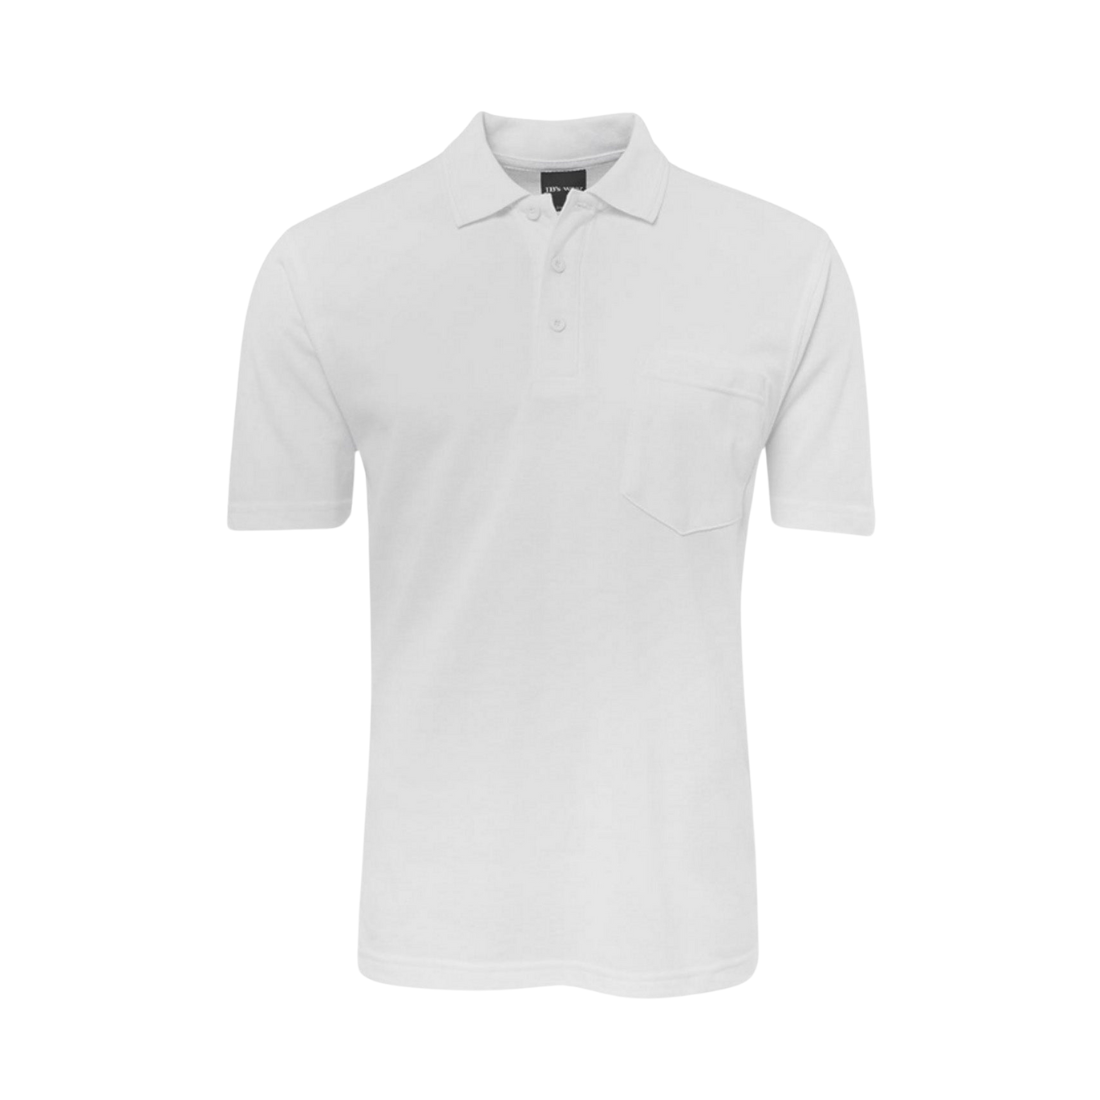 JBs Pocket Polo - Short Sleeve - LOADS OF COLOURS! M White Mens Polo by JBs Wear | The Bloke Shop